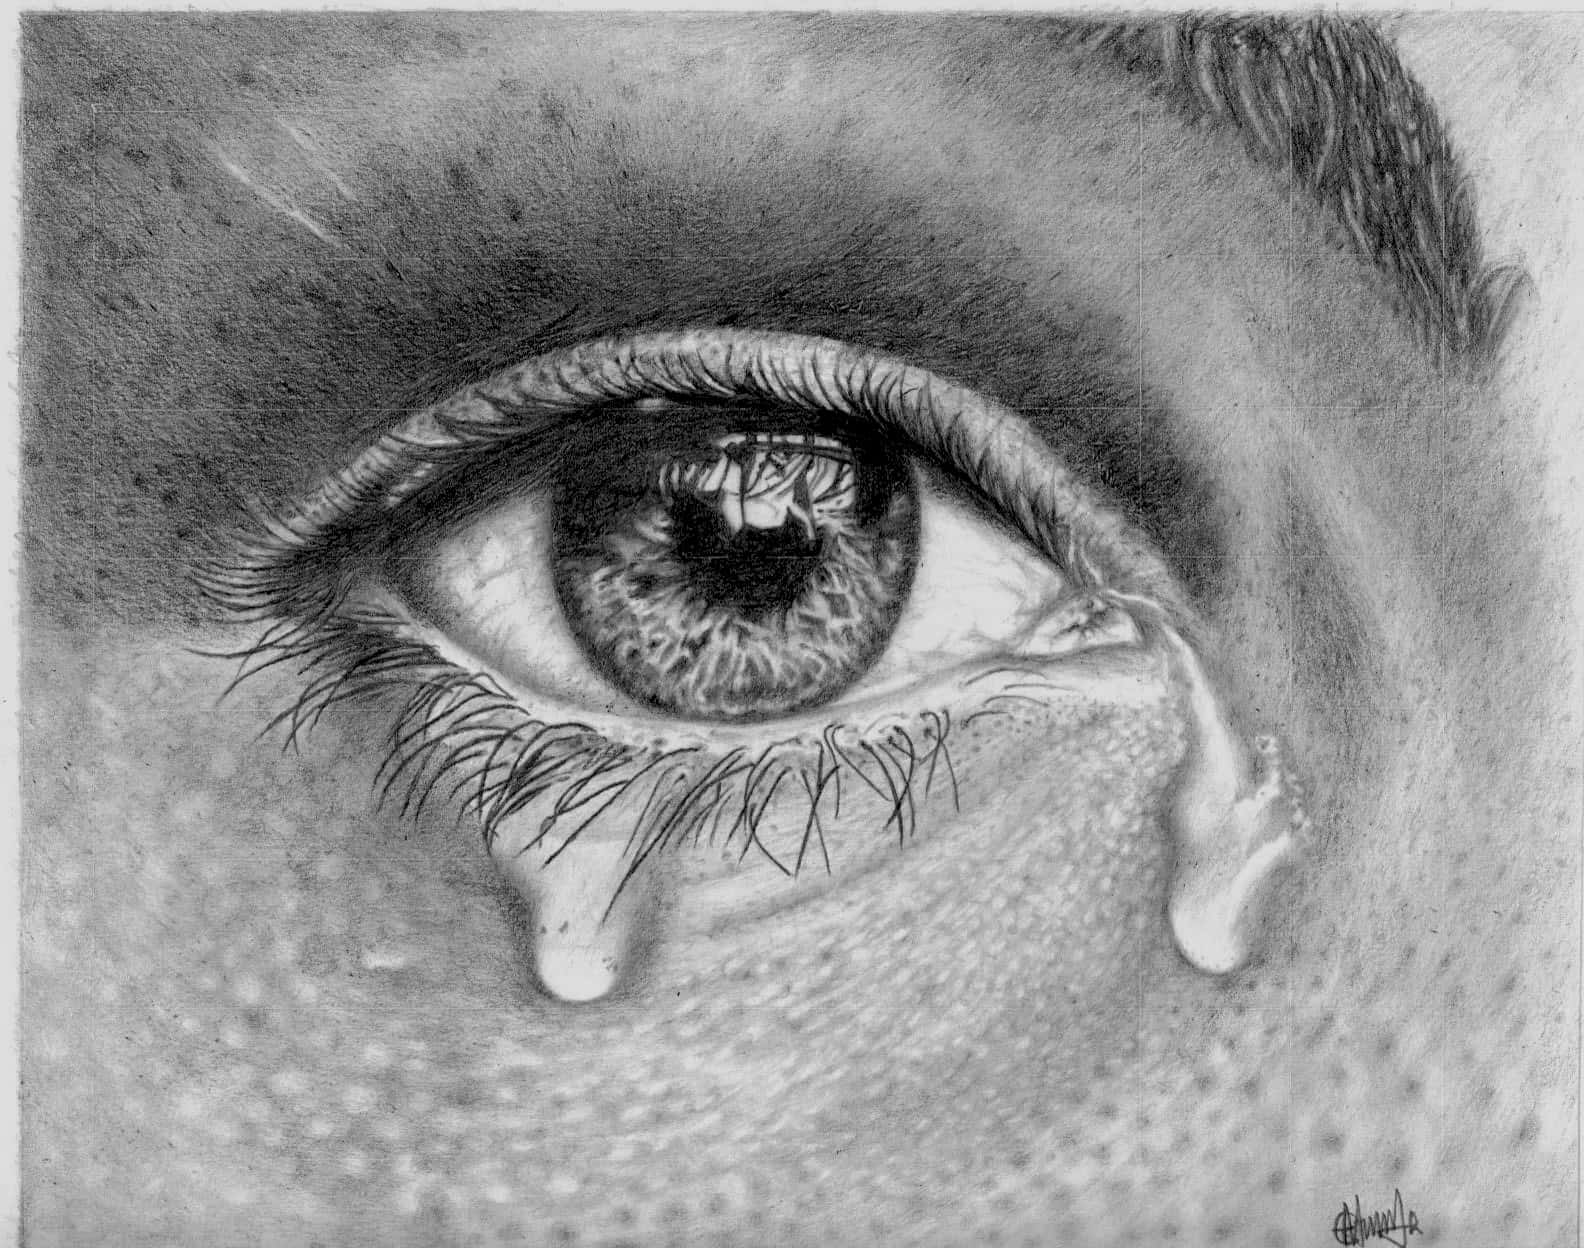 Tears of sorrow